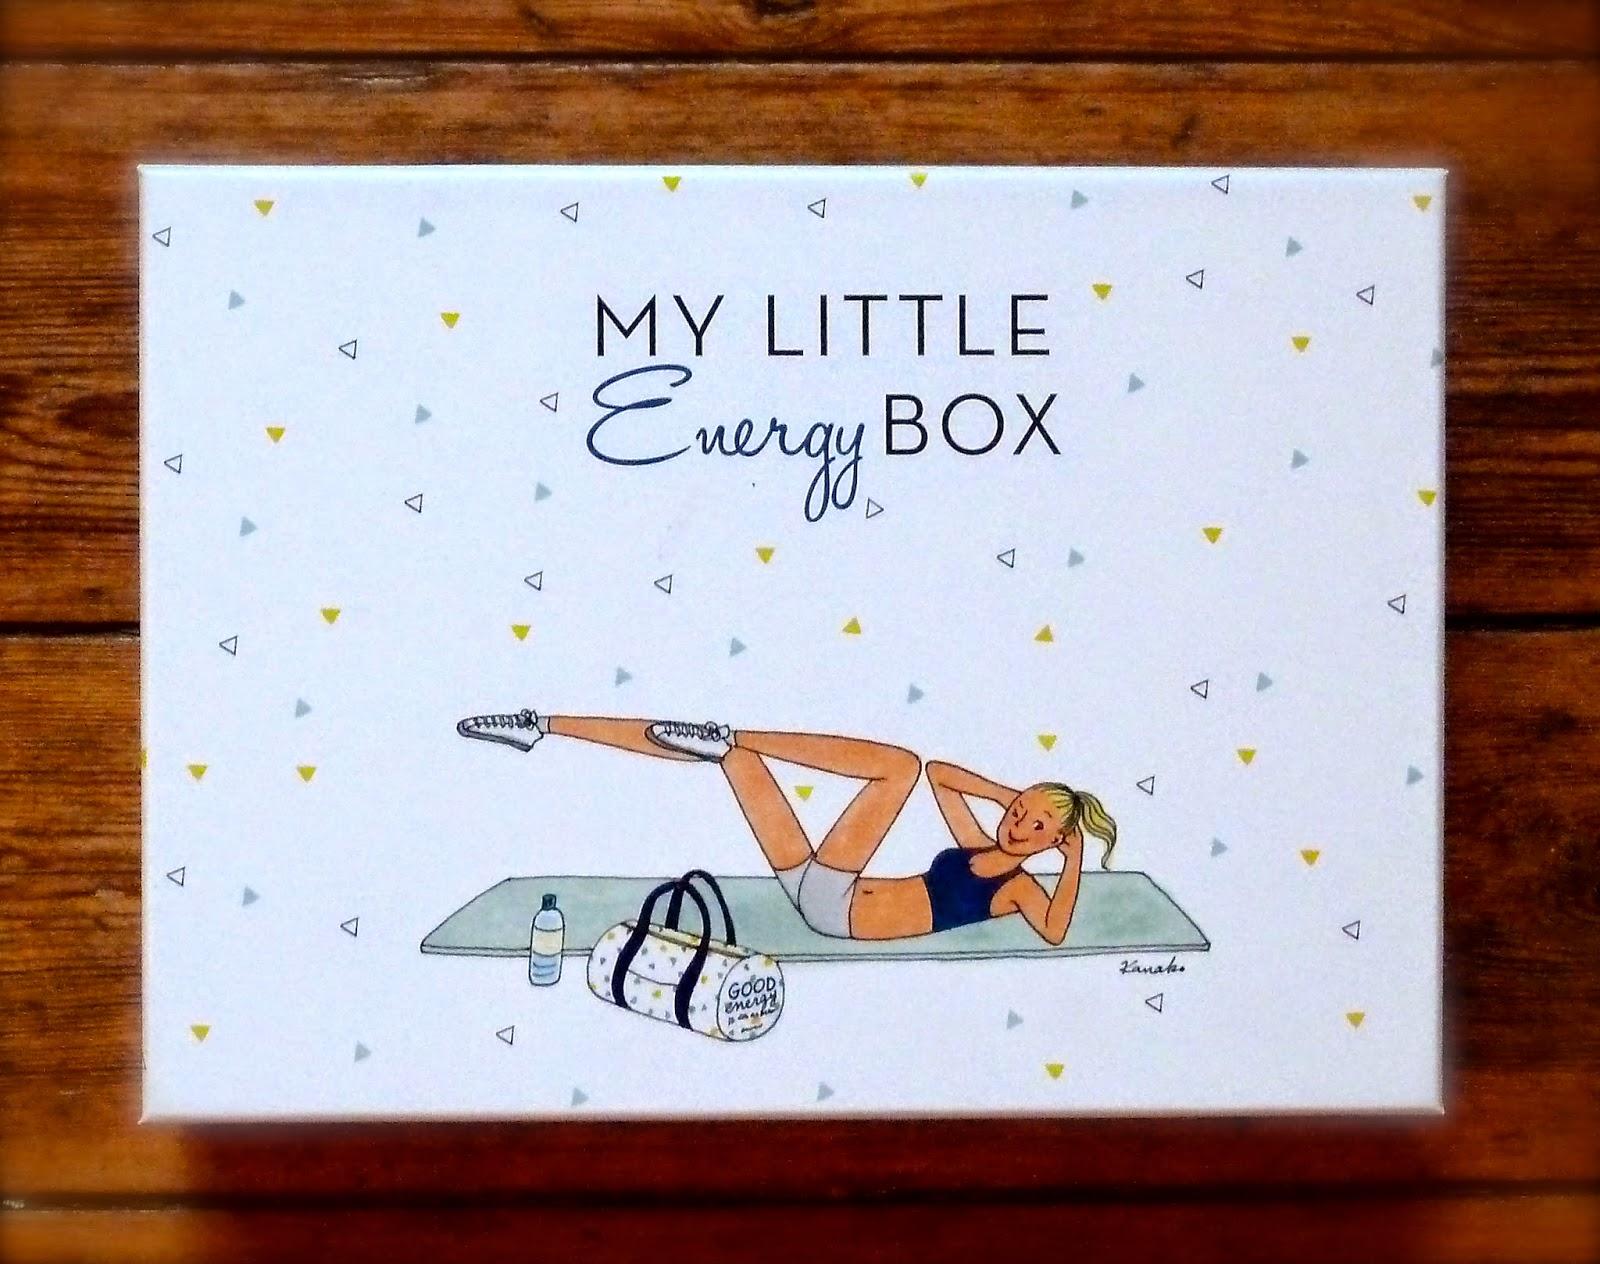 My Little Energy Box - Janvier 2015